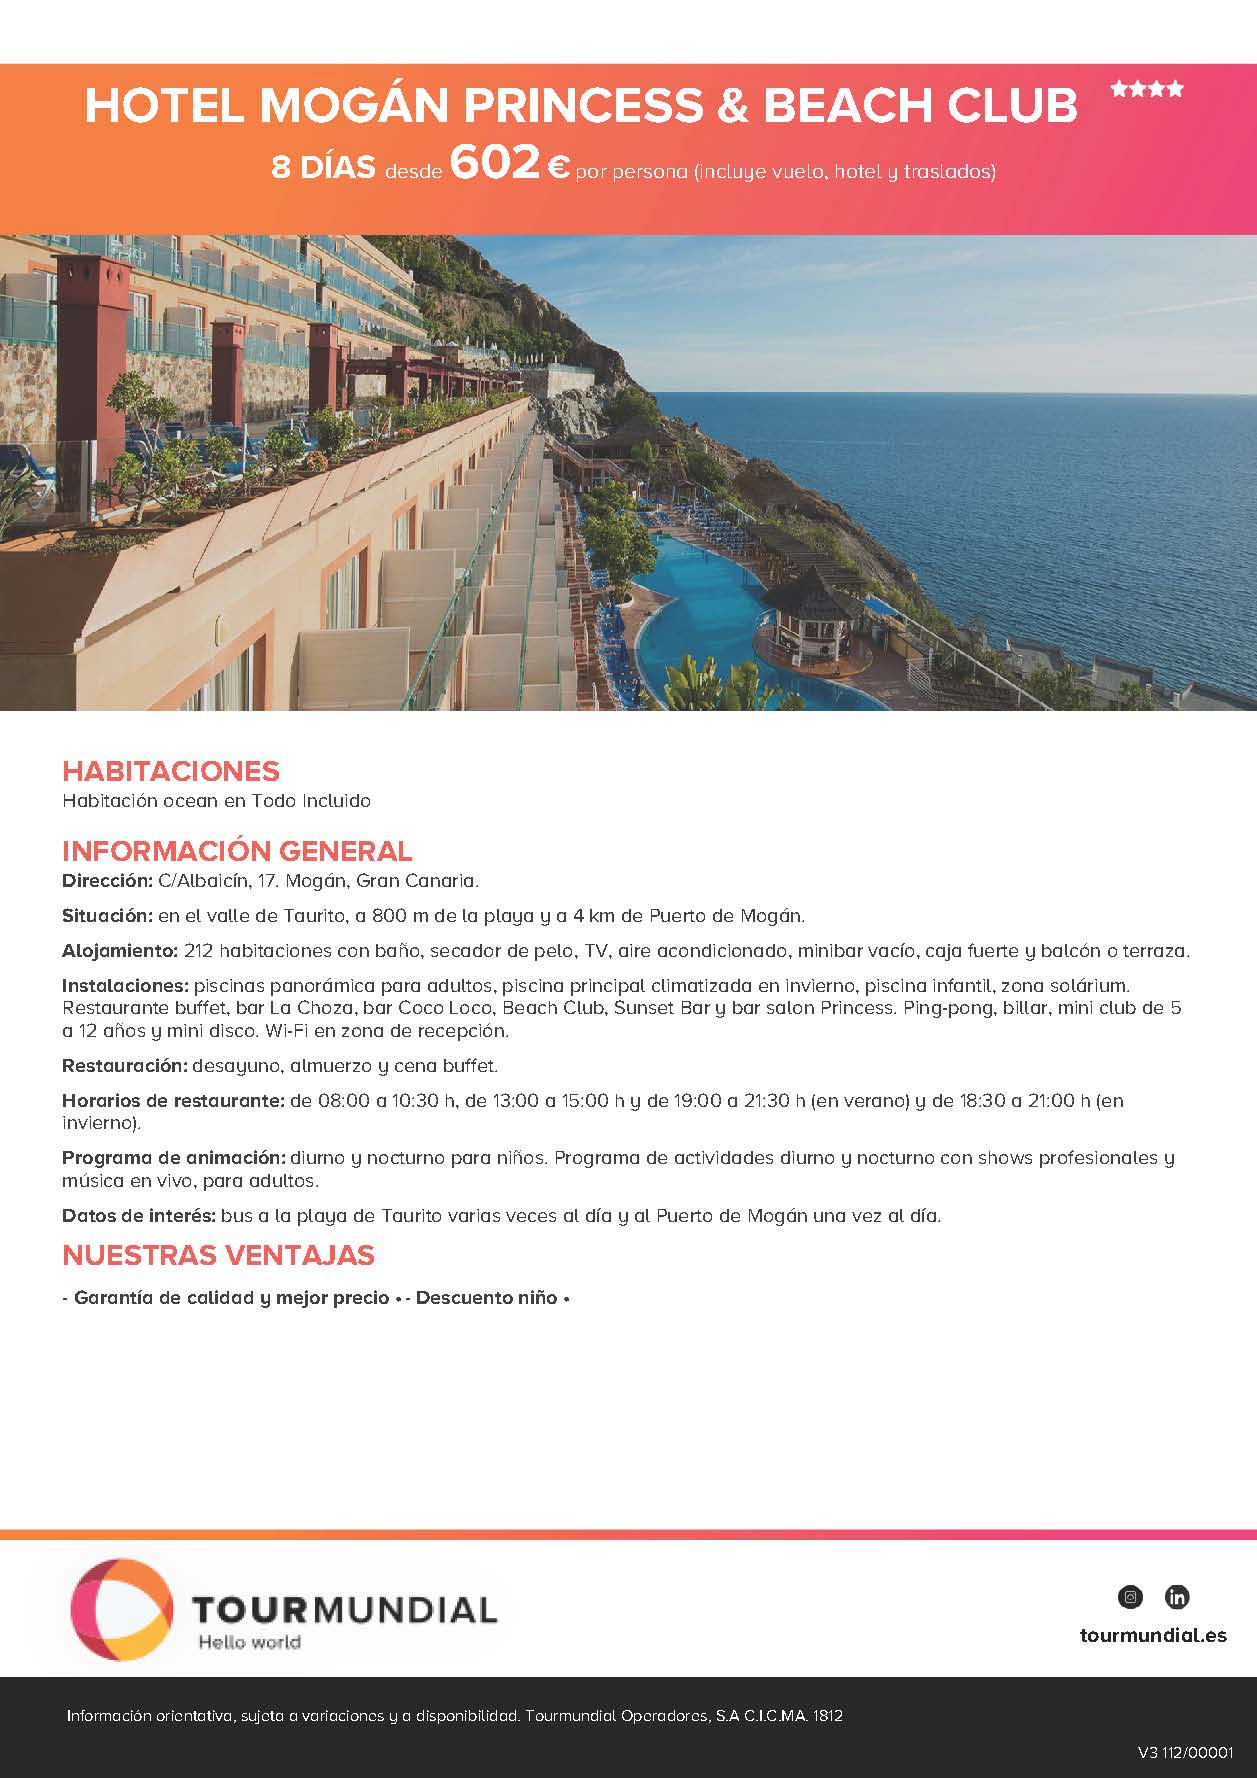 Oferta Tourmundial Gran Canaria 8 dias Hotel Mogan Princess and Beach Club 4 estrellas Todo Incluido